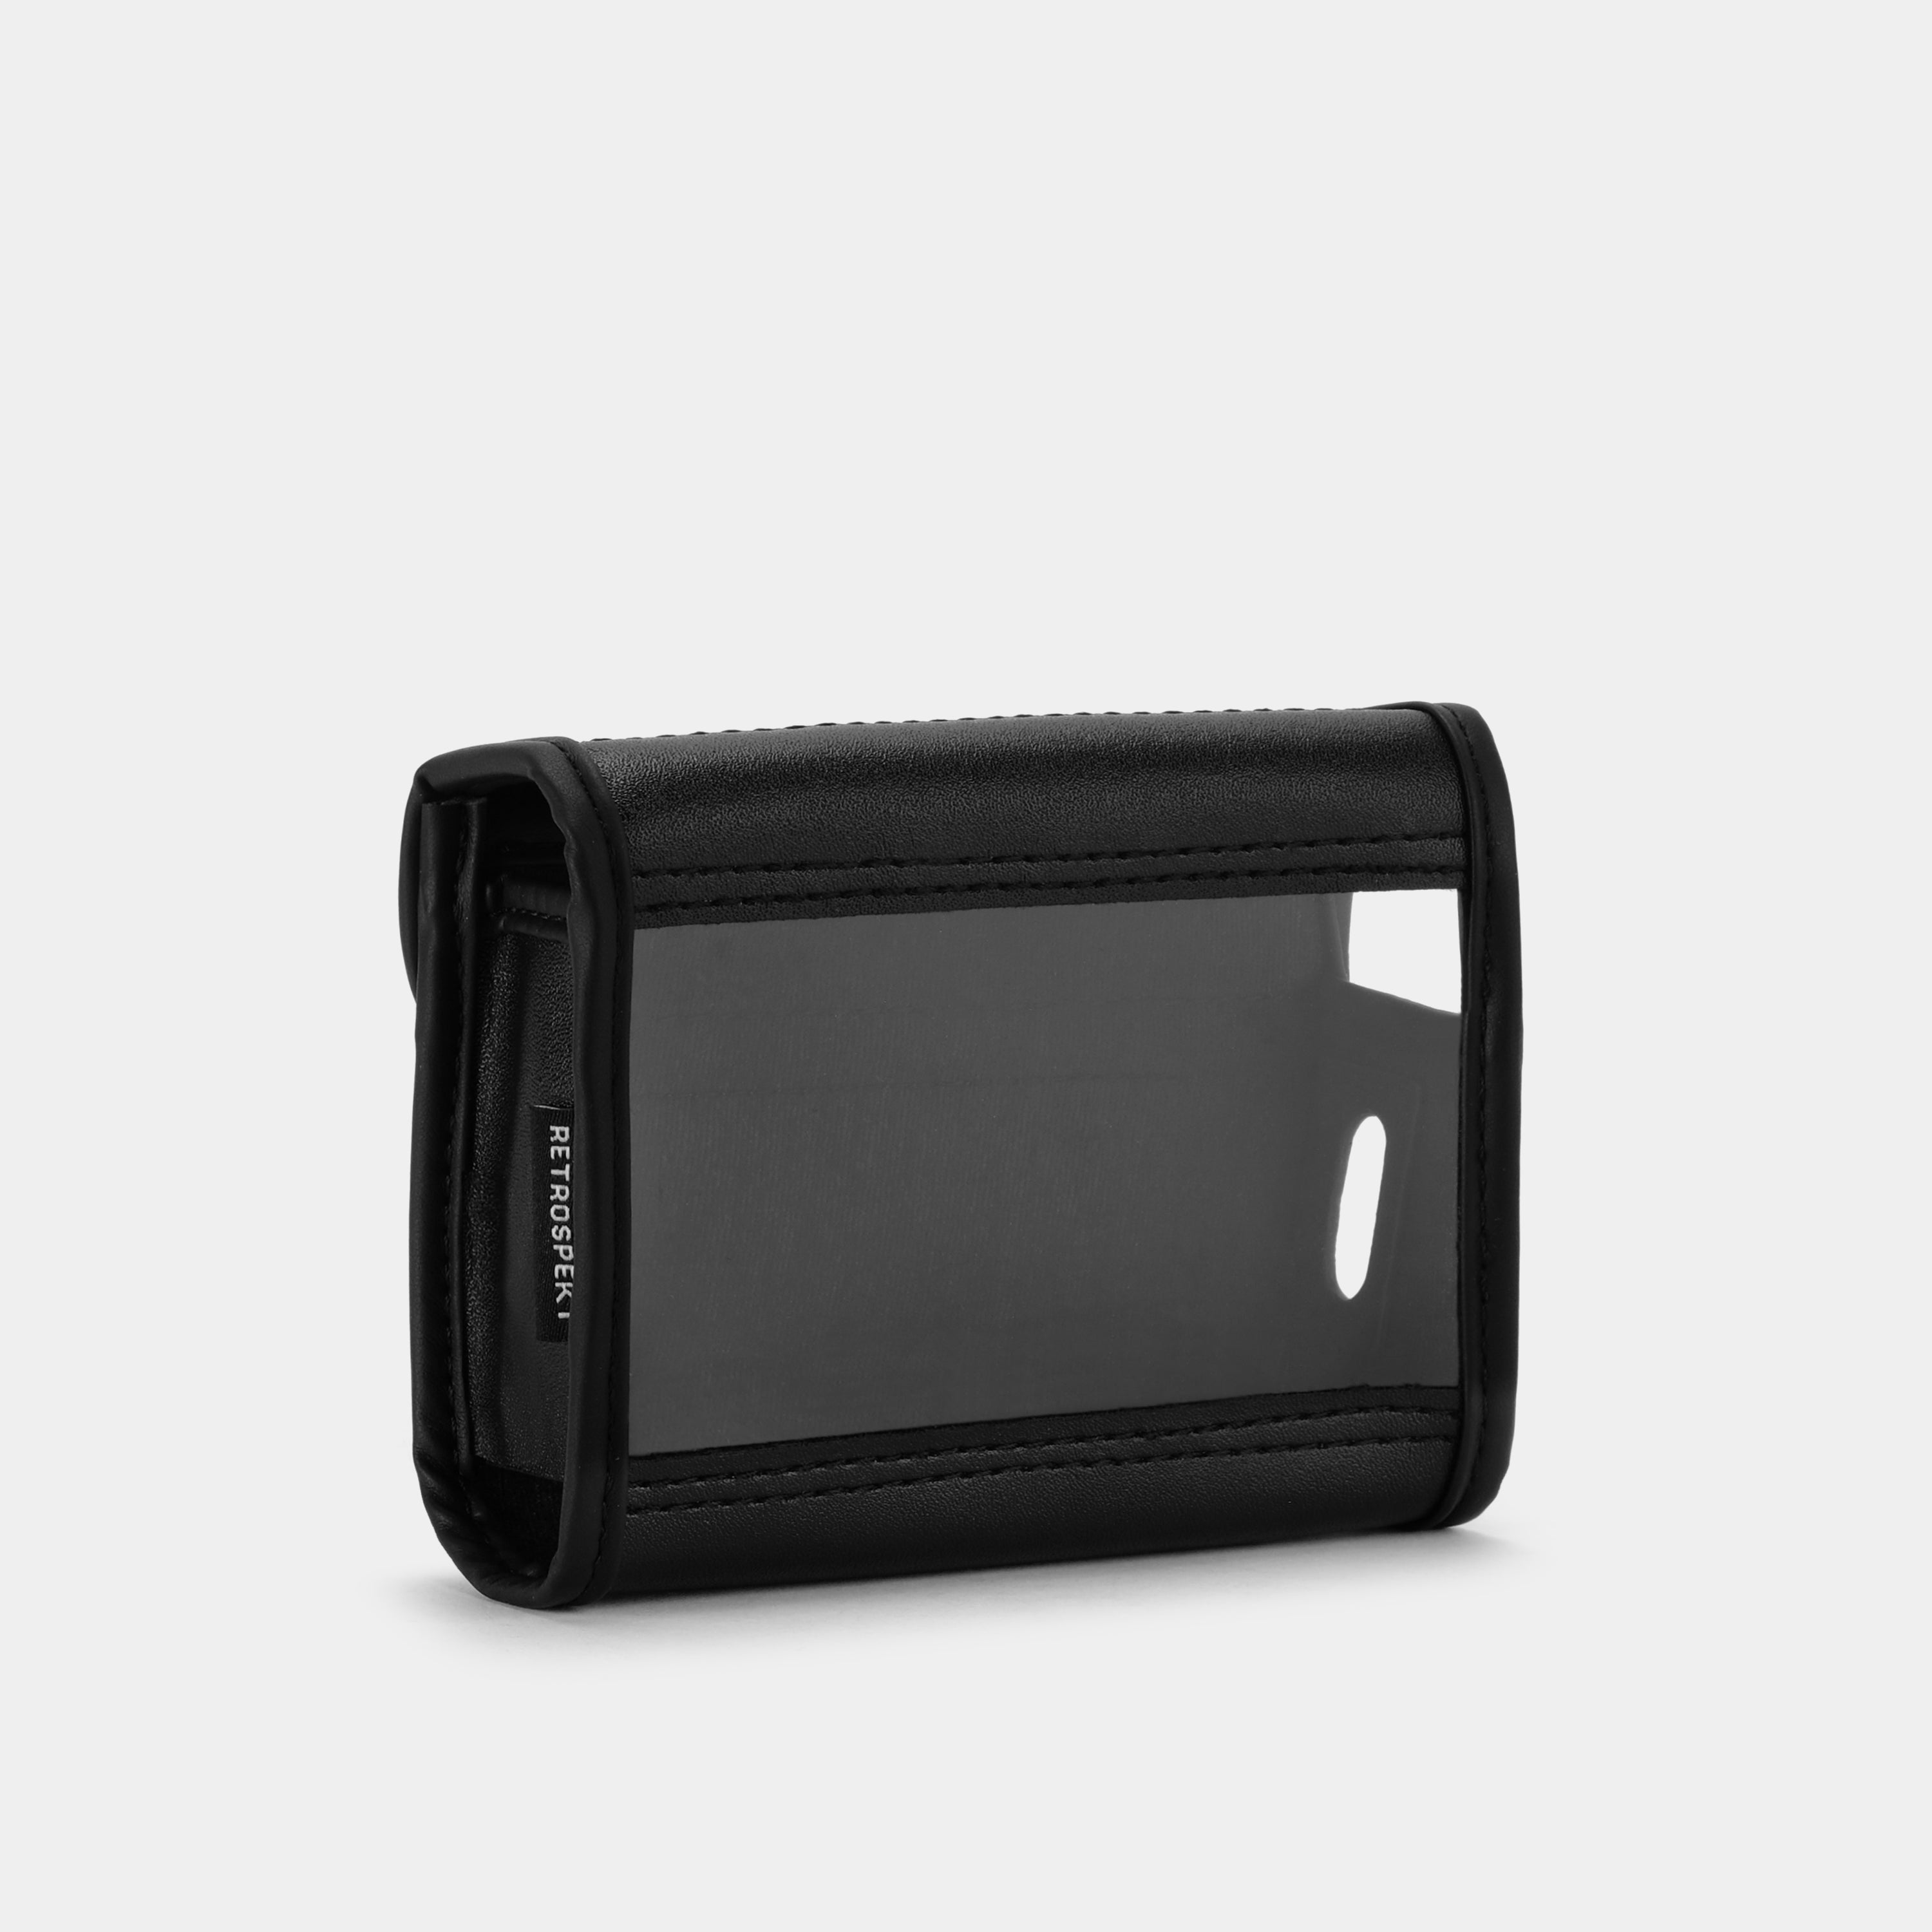 CP-81 Portable Cassette Player Black Leather Clip Case